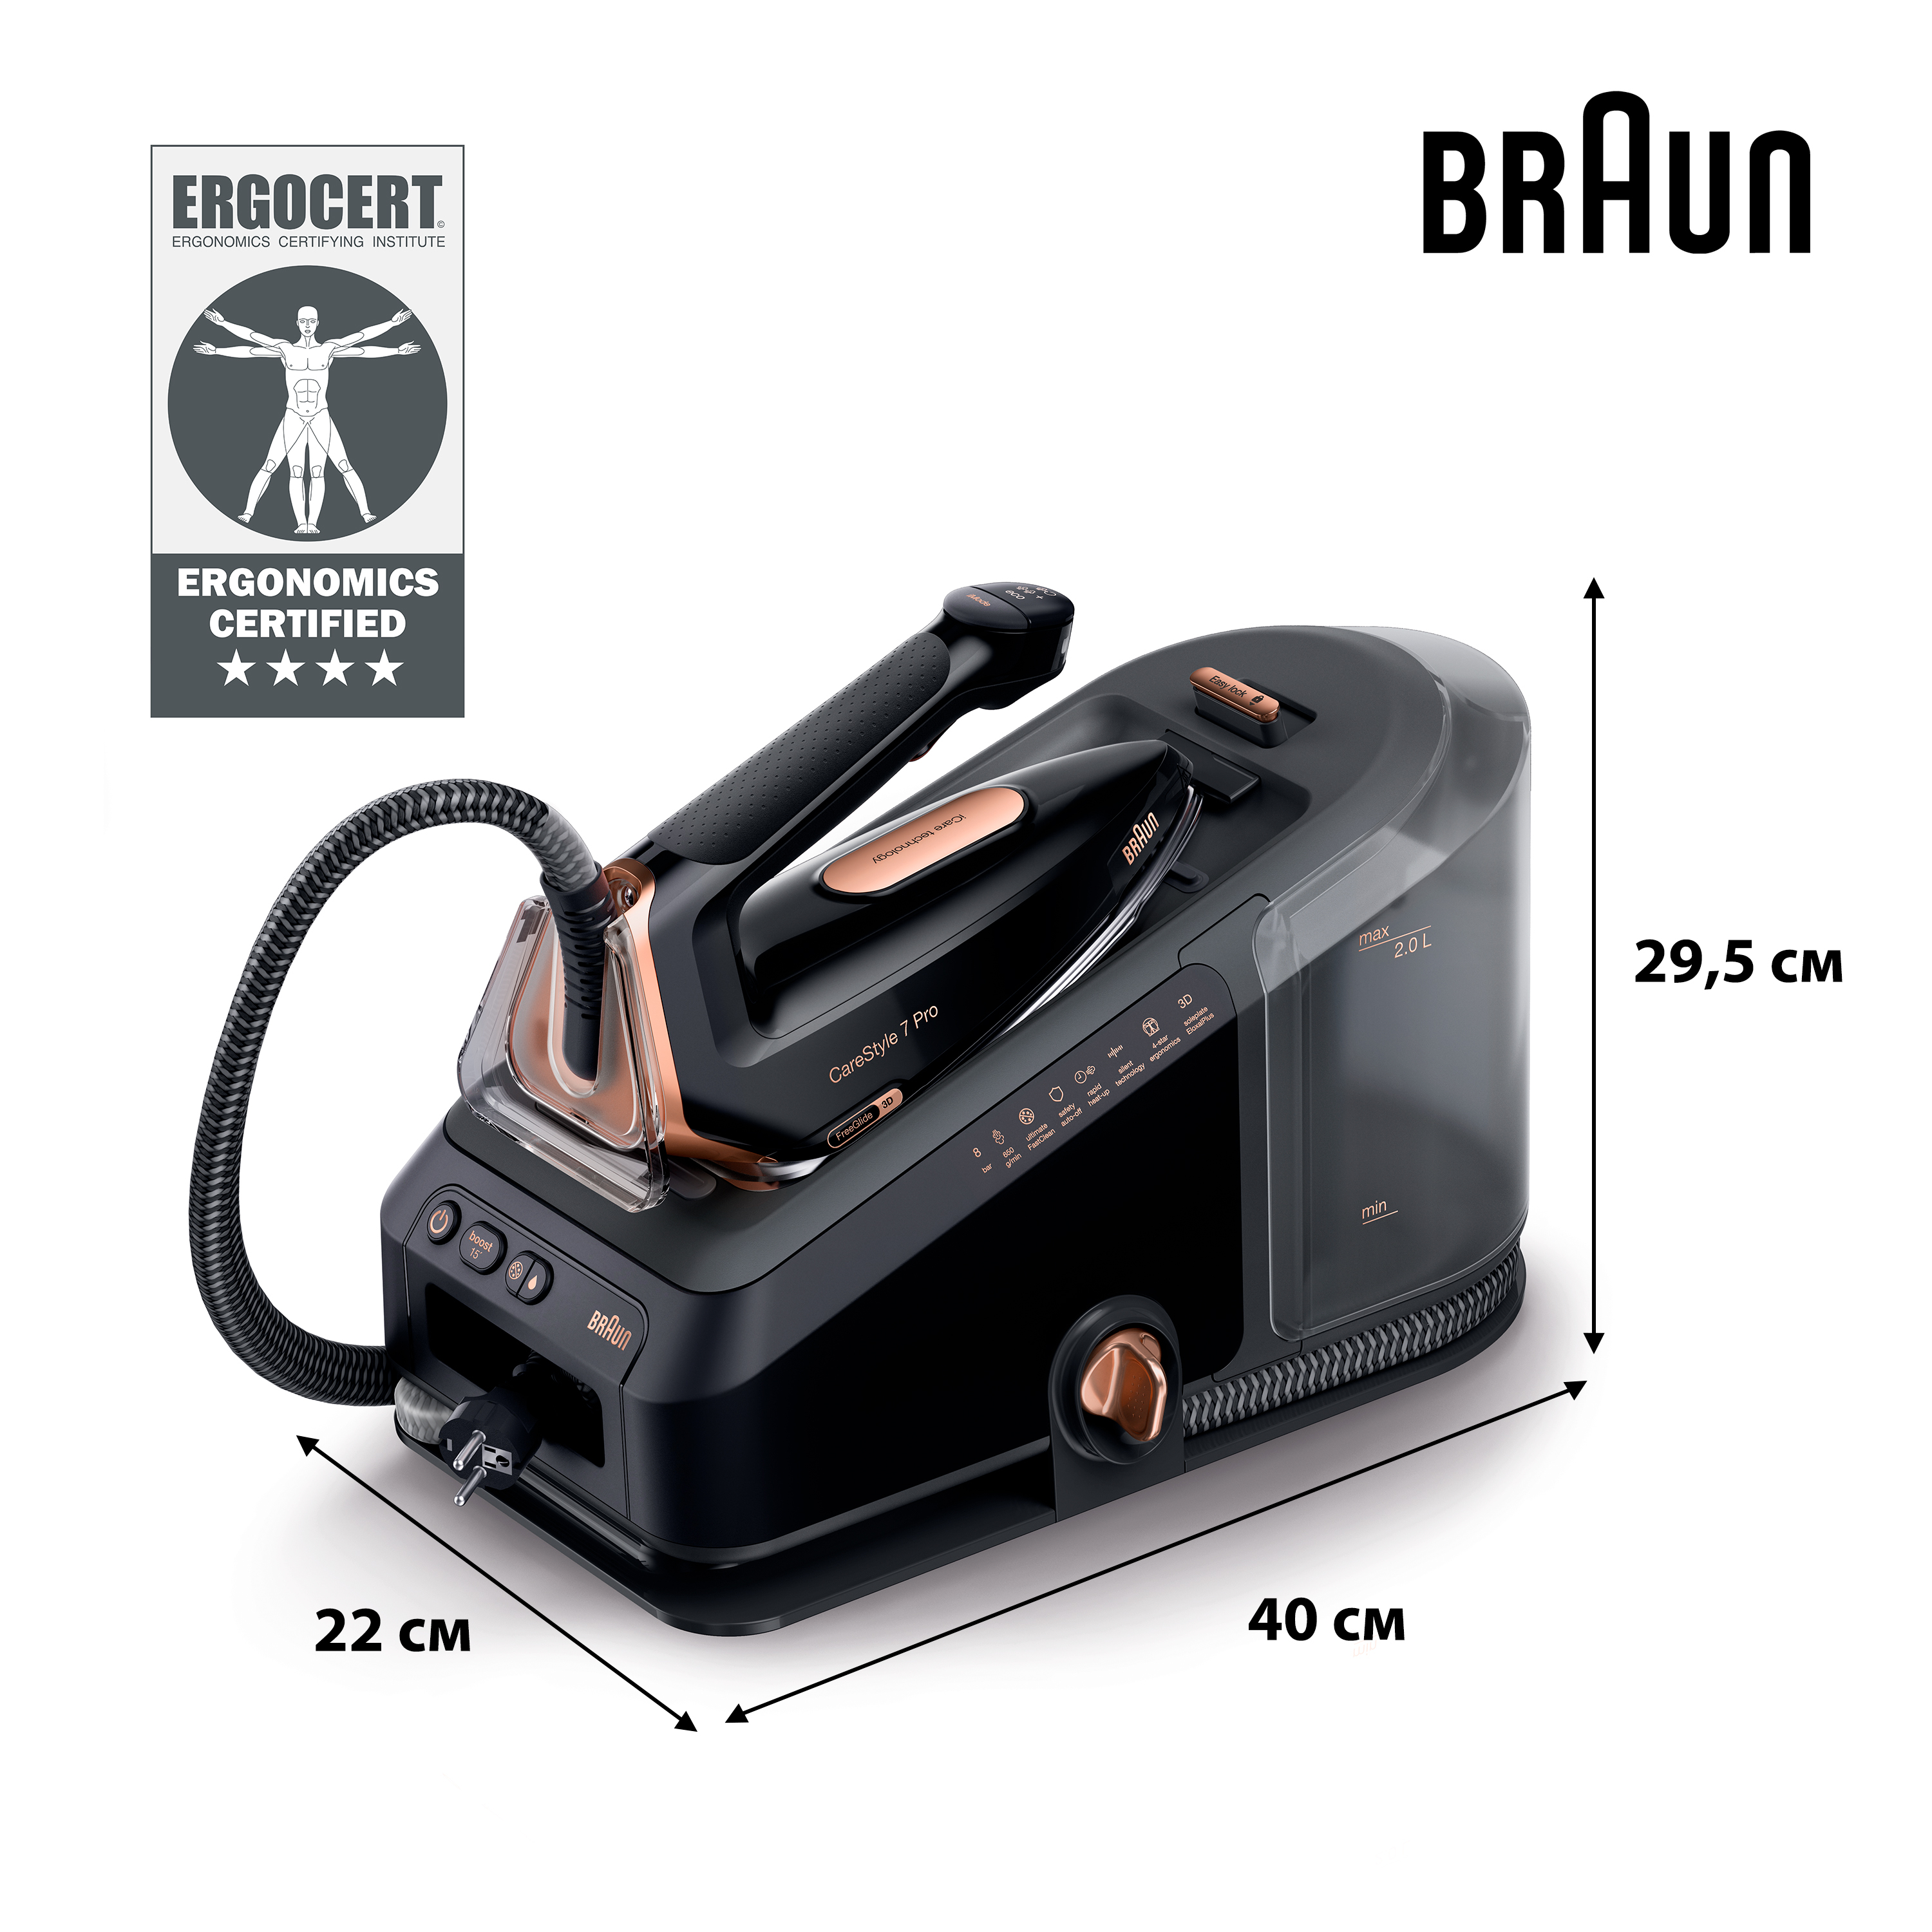 Гладильная система Braun CareStyle 7 Pro IS 7286 BK SS черная - фото 5